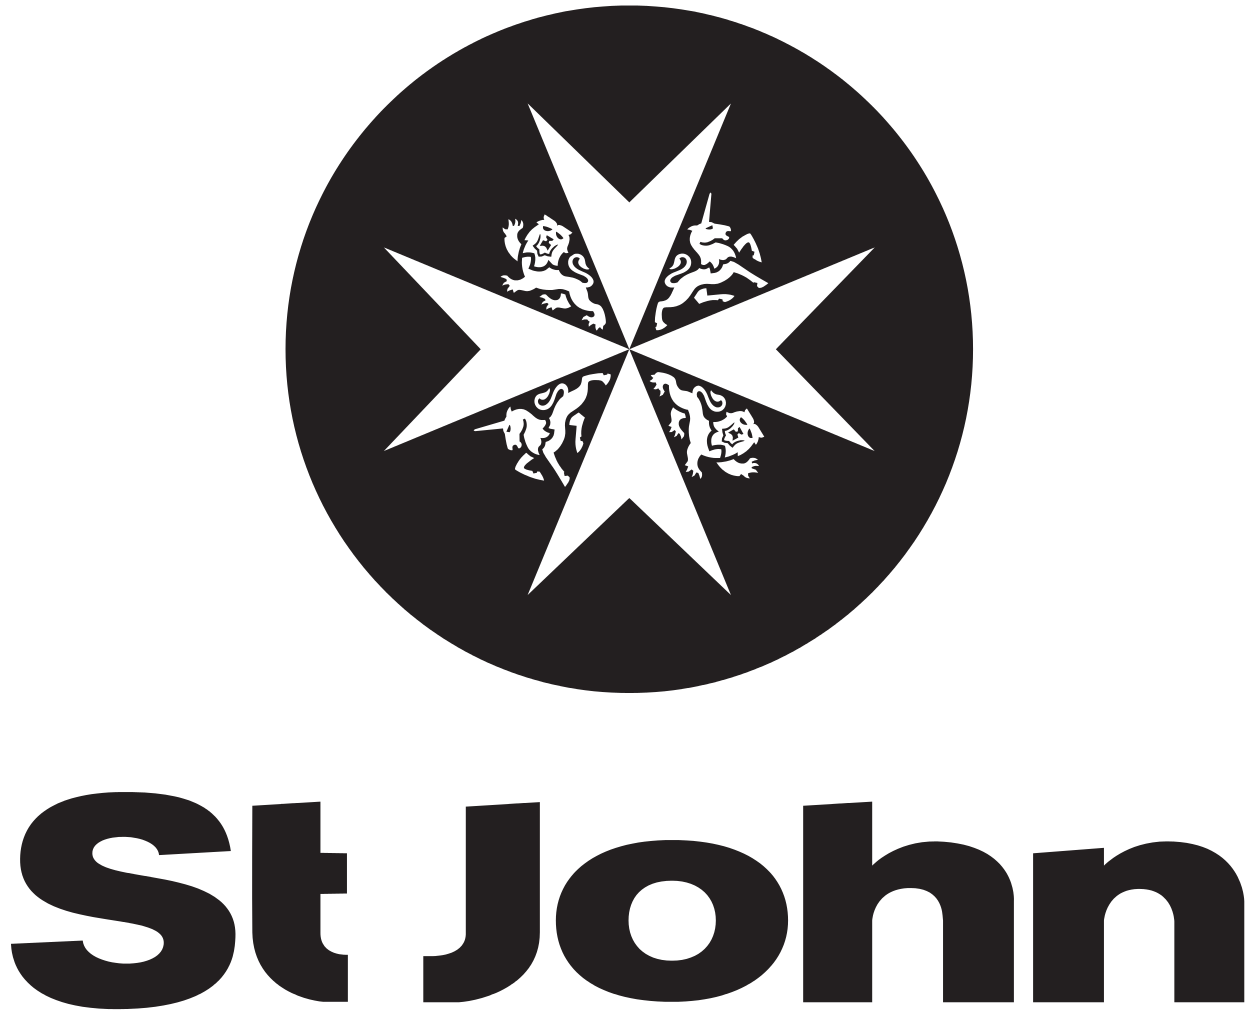 File:St John New Zealand logo.svg - Wikipedia, the free encyclopedia